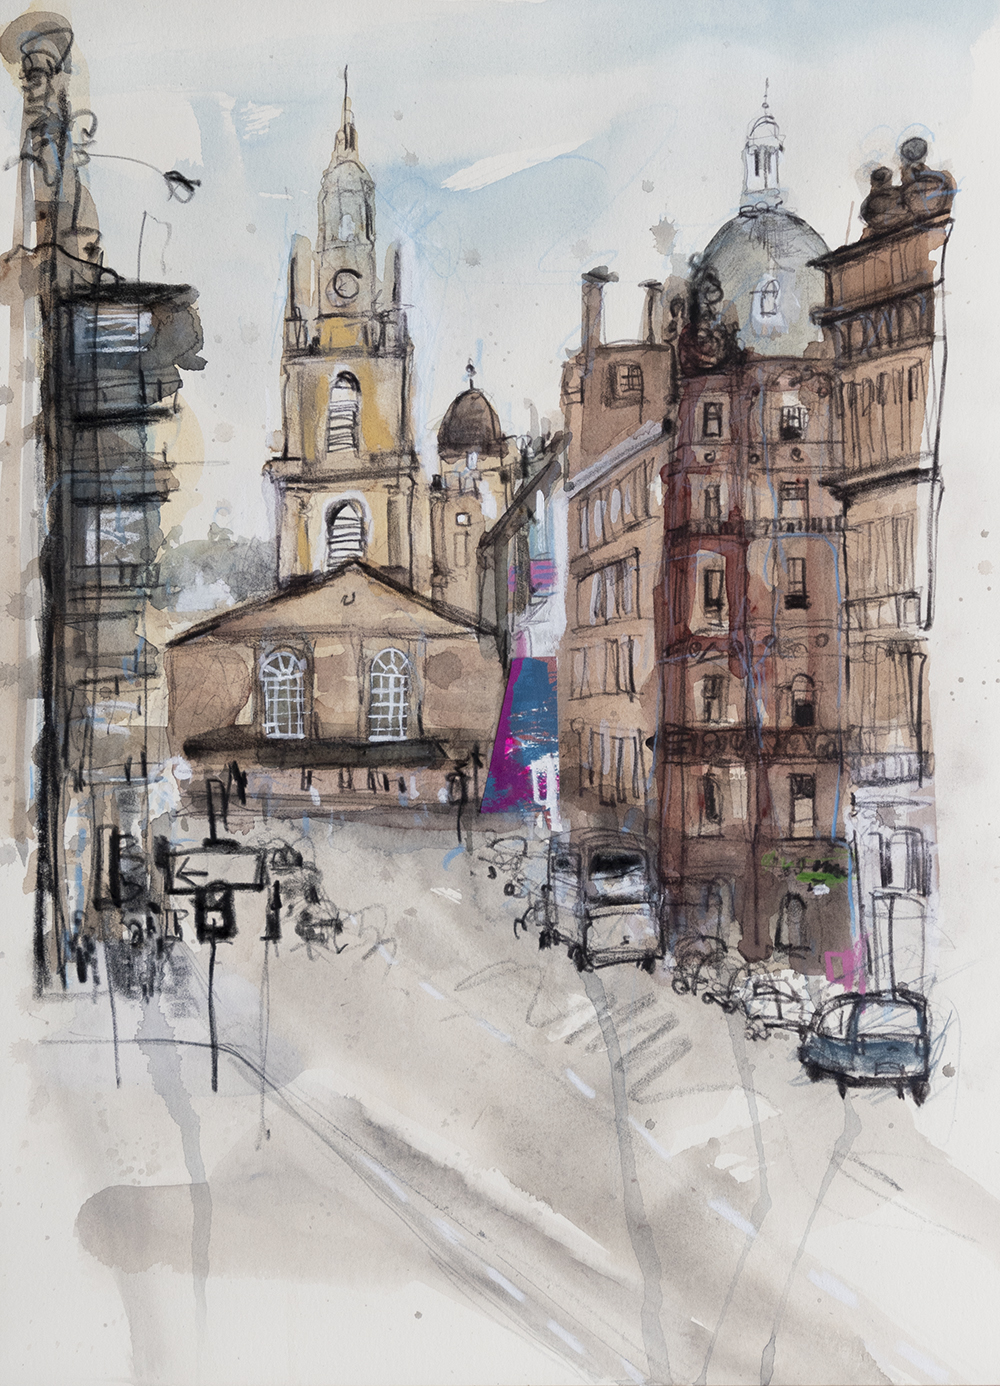 'West George Street' by artist Kelly  Stewart